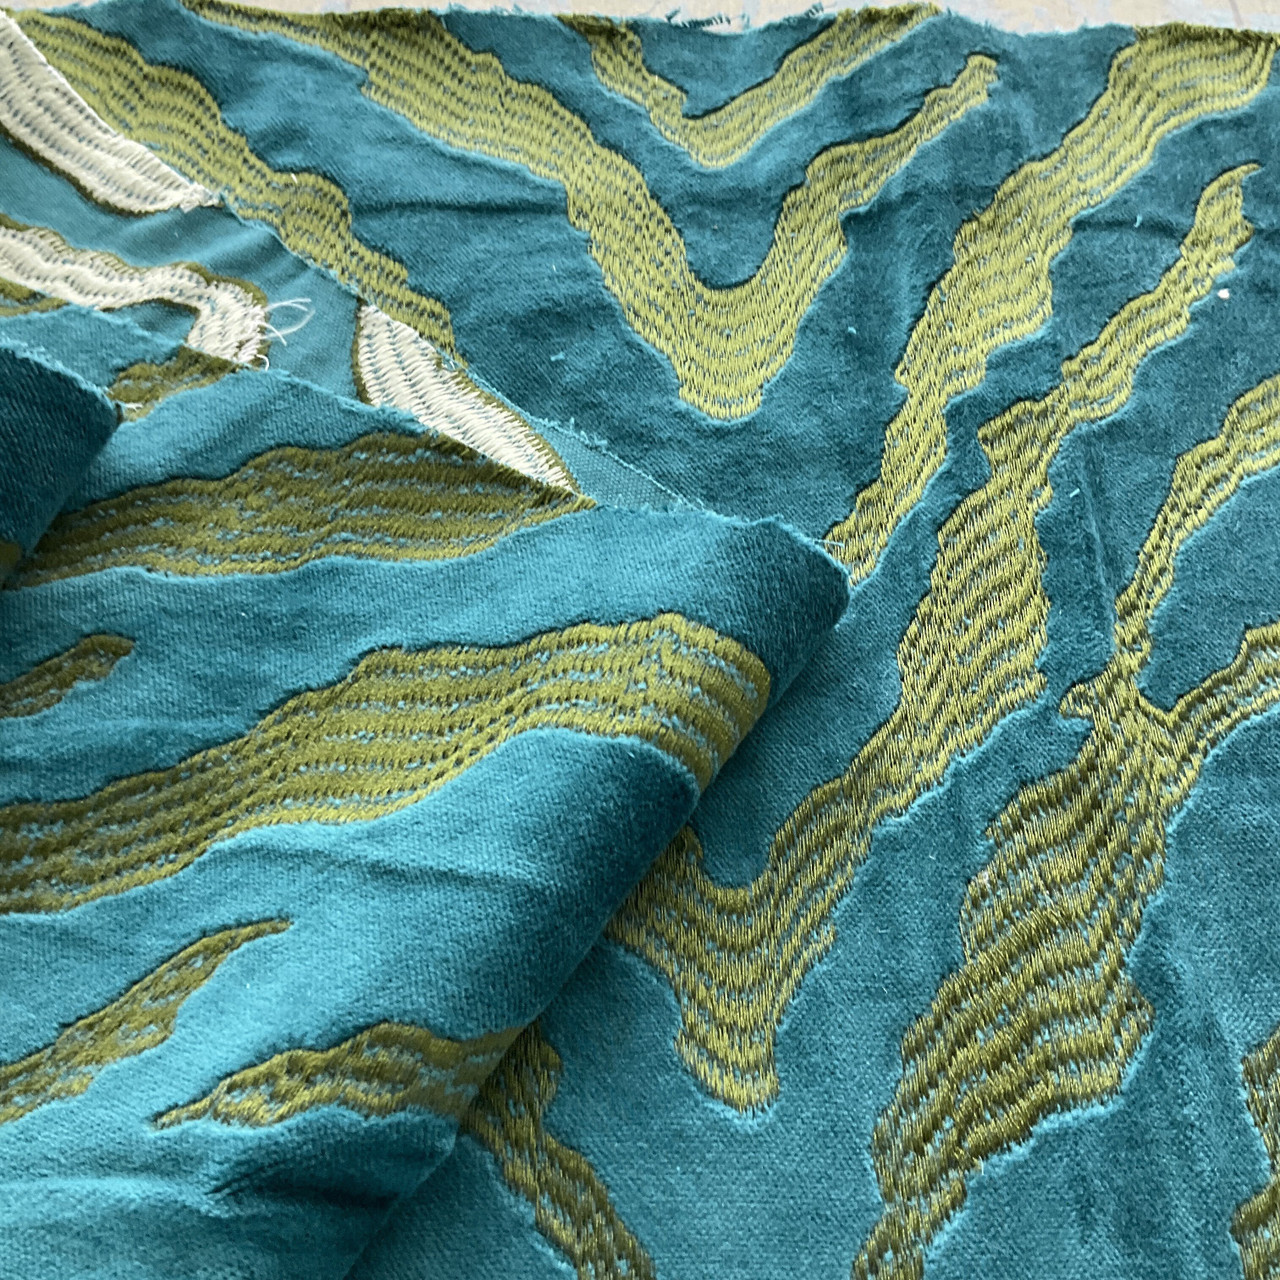 HD Sunflower Cotton Fabric - Fabrics - KaTee's Bowtique & Custom Embroidery  - Tampa Custom Products